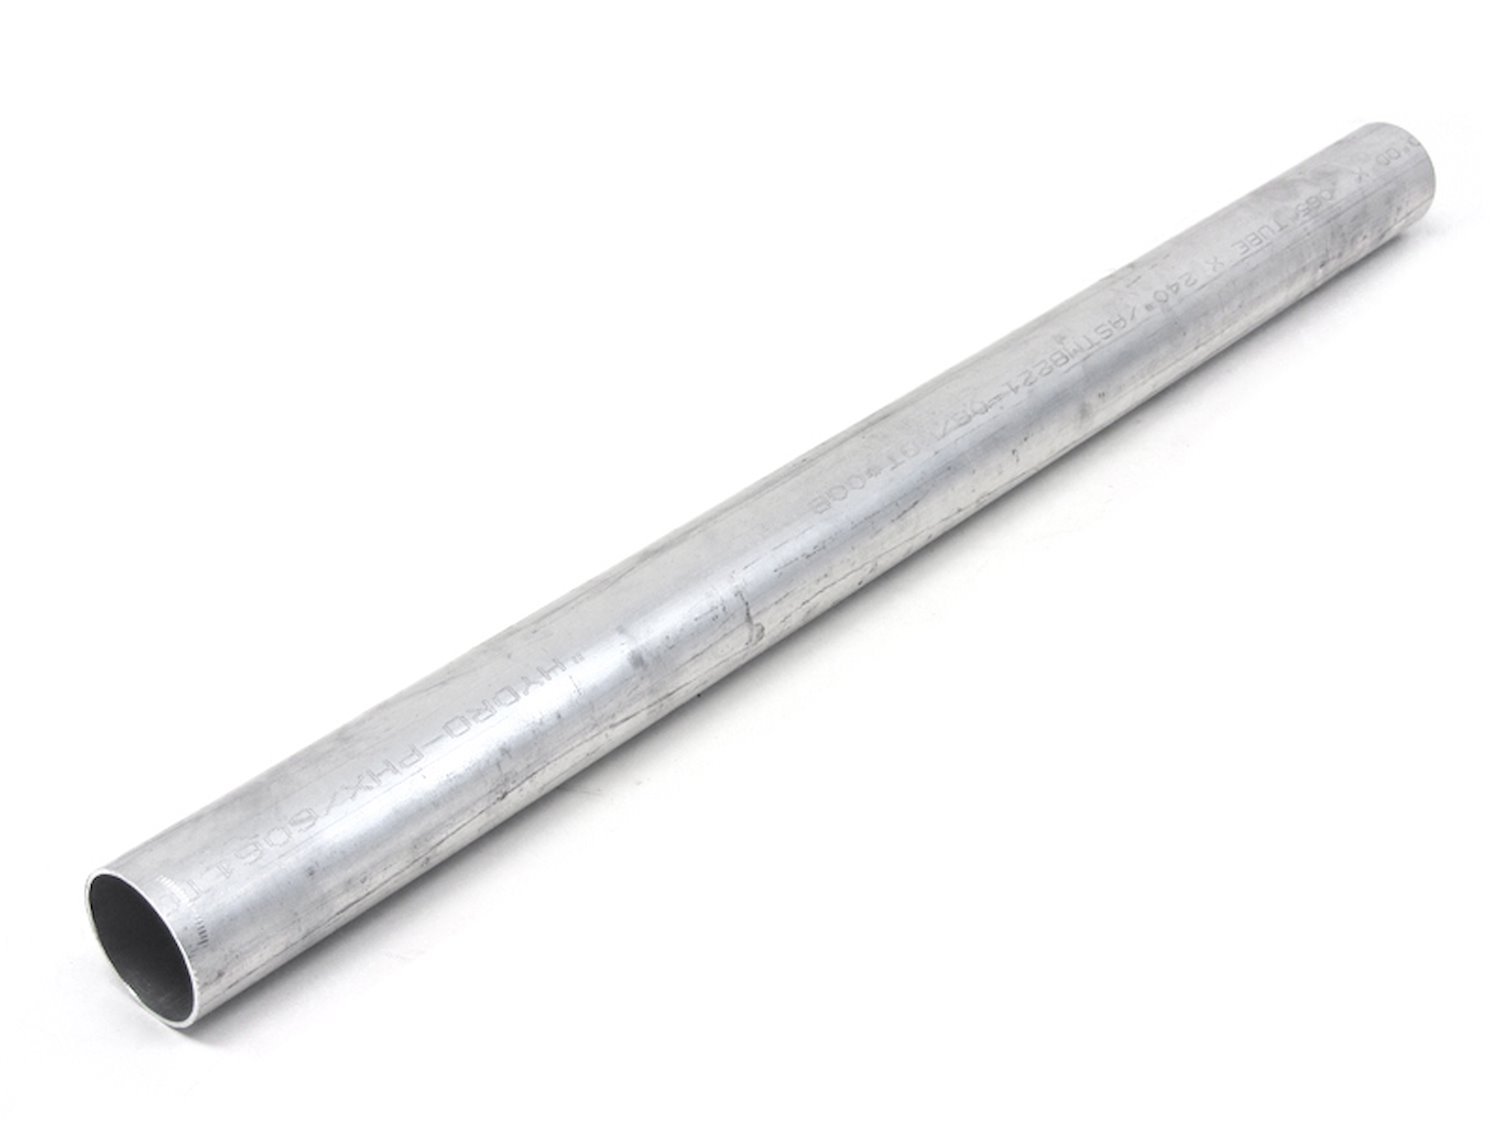 AST-3F-162 Aluminum Tubing, 6061 Aluminum, Straight Tubing, 1-5/8 in. OD, Seamless, Raw Finish, 3 ft. Long